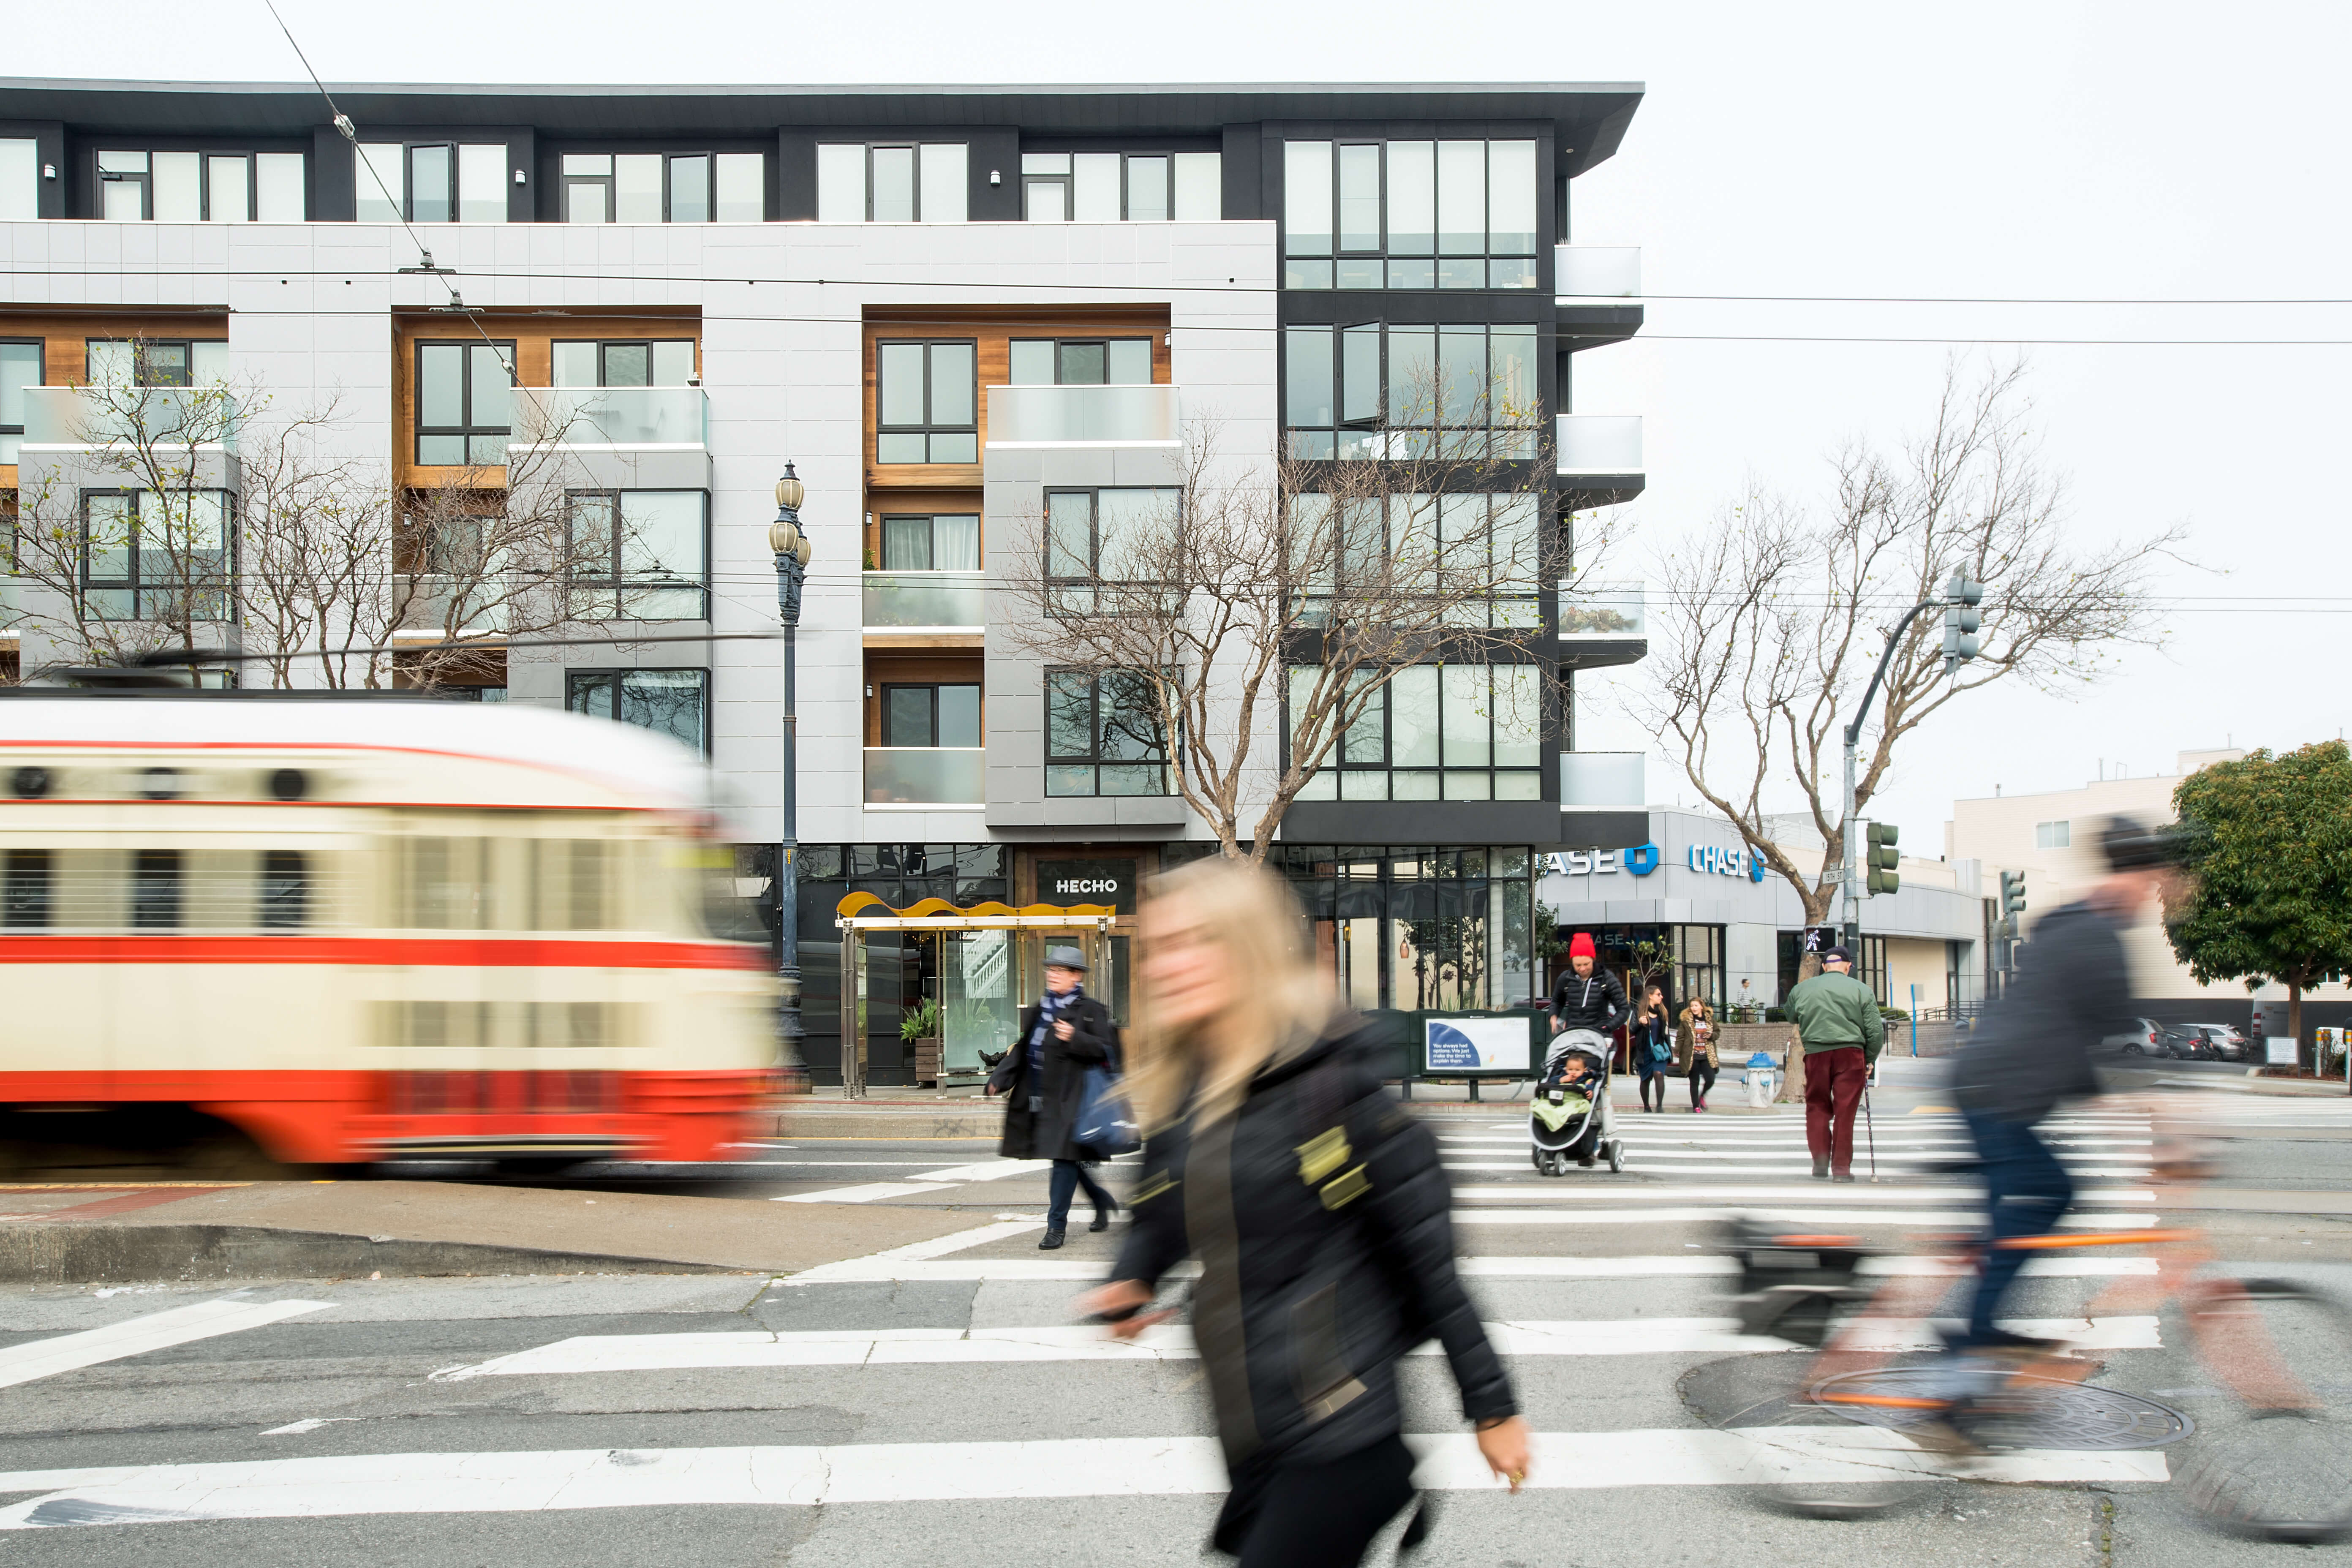 Biking and walking are popular methods of transportation for San Francisco residents.